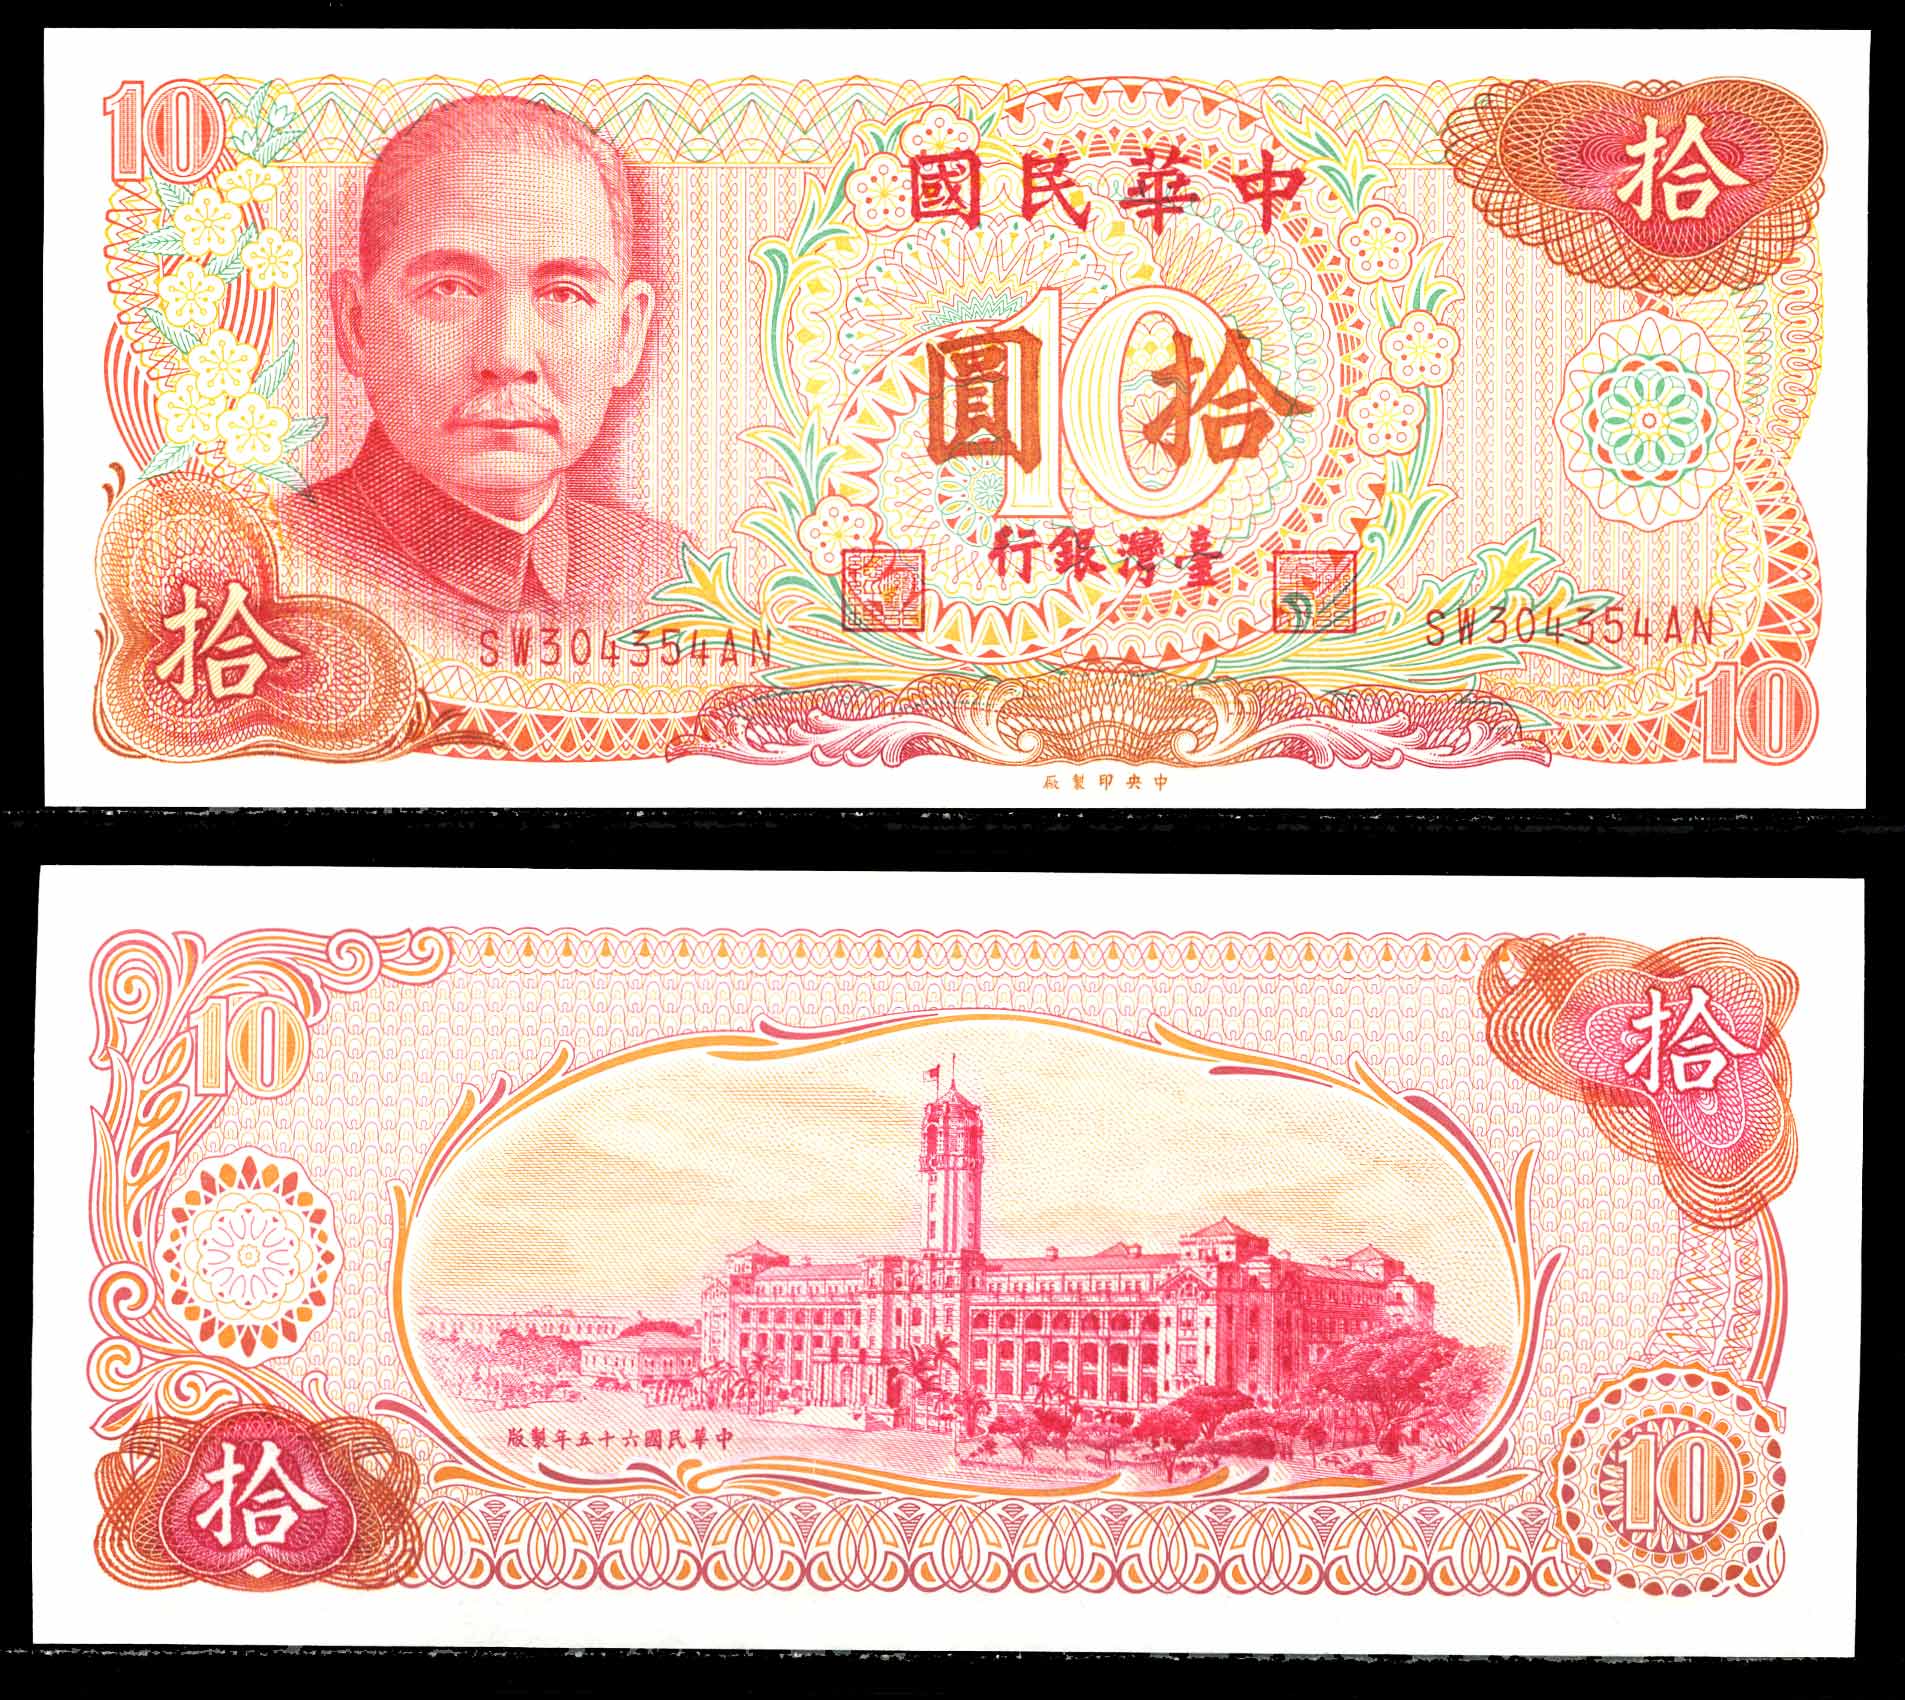 Тайвань деньги. 10 Юань банкнота Тайвань. Банкнота 100 юаней Тайвань. 10 Юаней Китай банкноты. Банкноты Тайваня 2020.